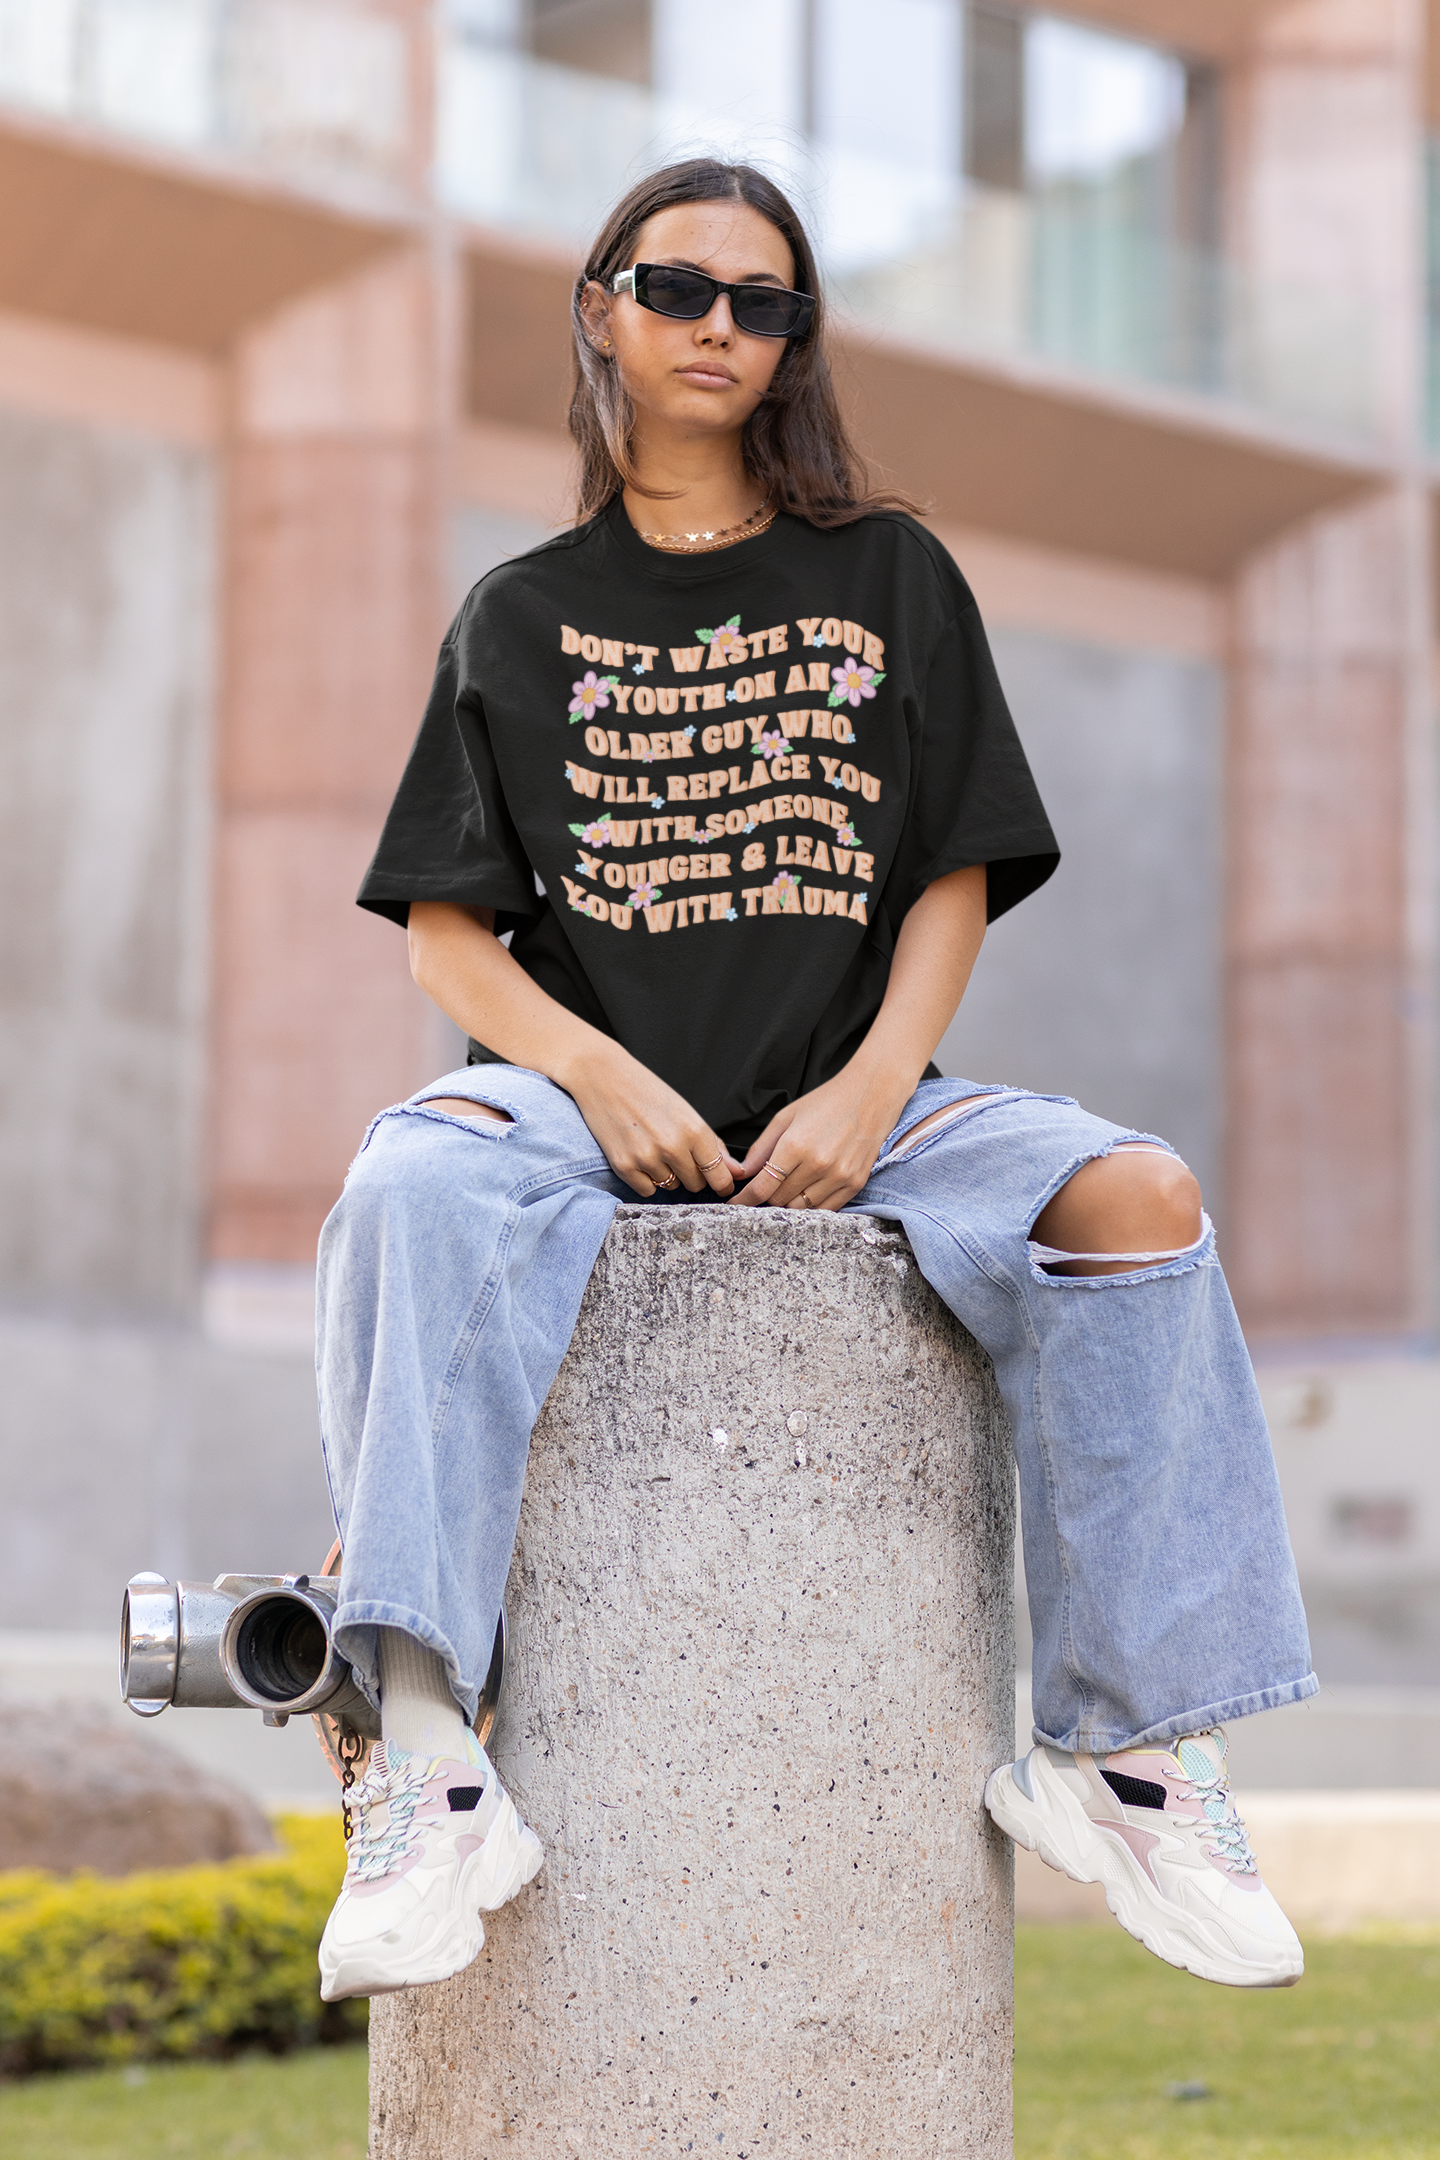 Don’t Waste Your Youth Unisex Feminist t-shirt - Shop Women’s Rights T-shirts - Feminist Trash Store - Oversized Black Women’s Shirt